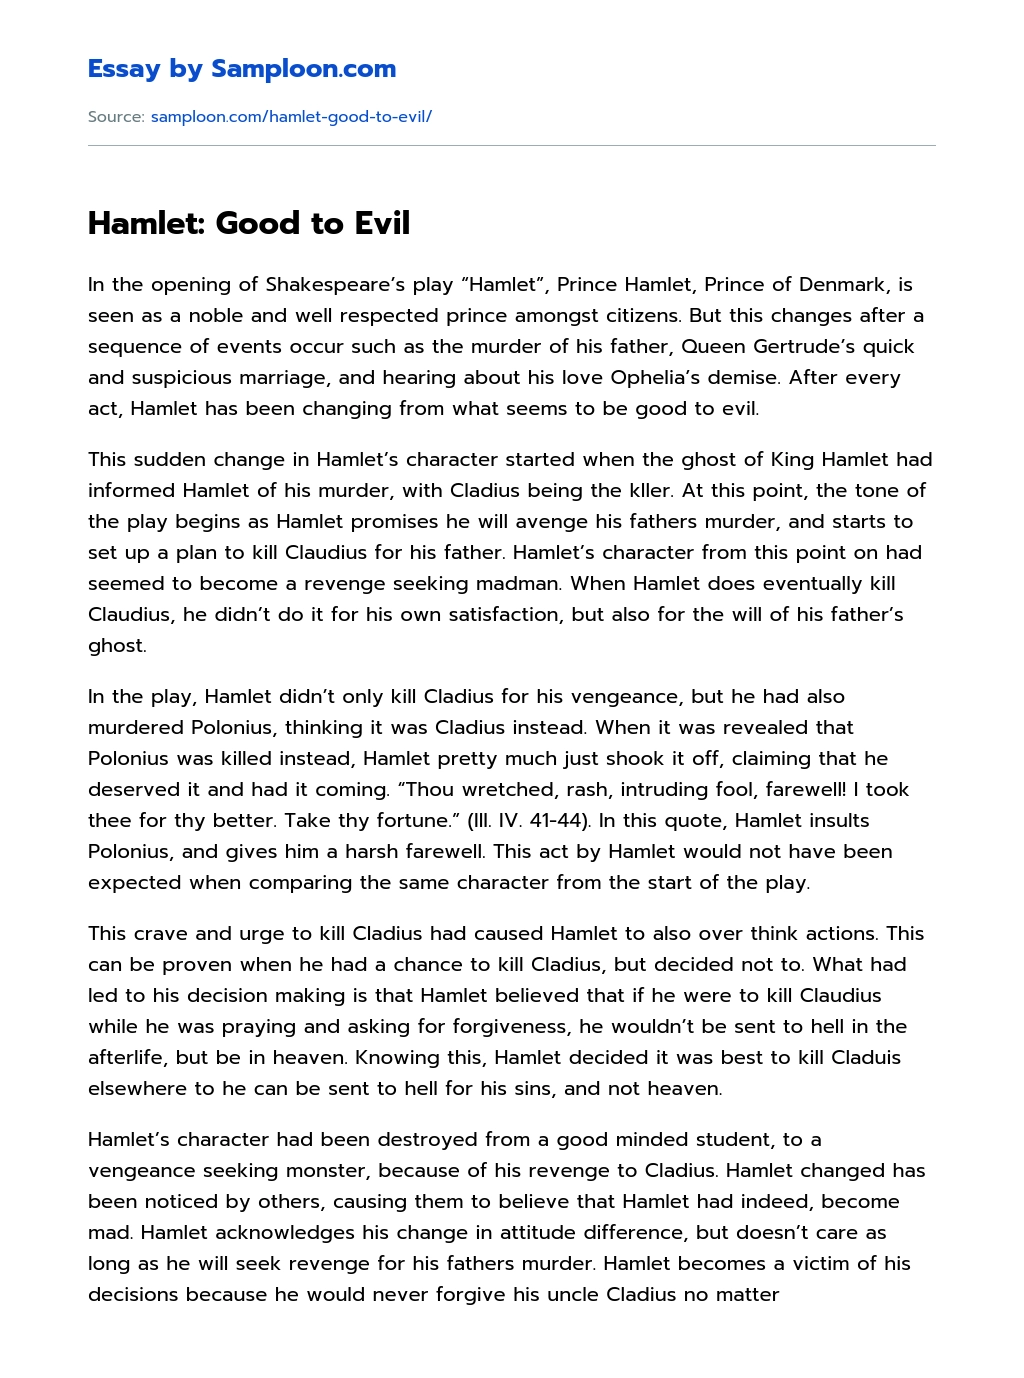 Hamlet: Good to Evil essay